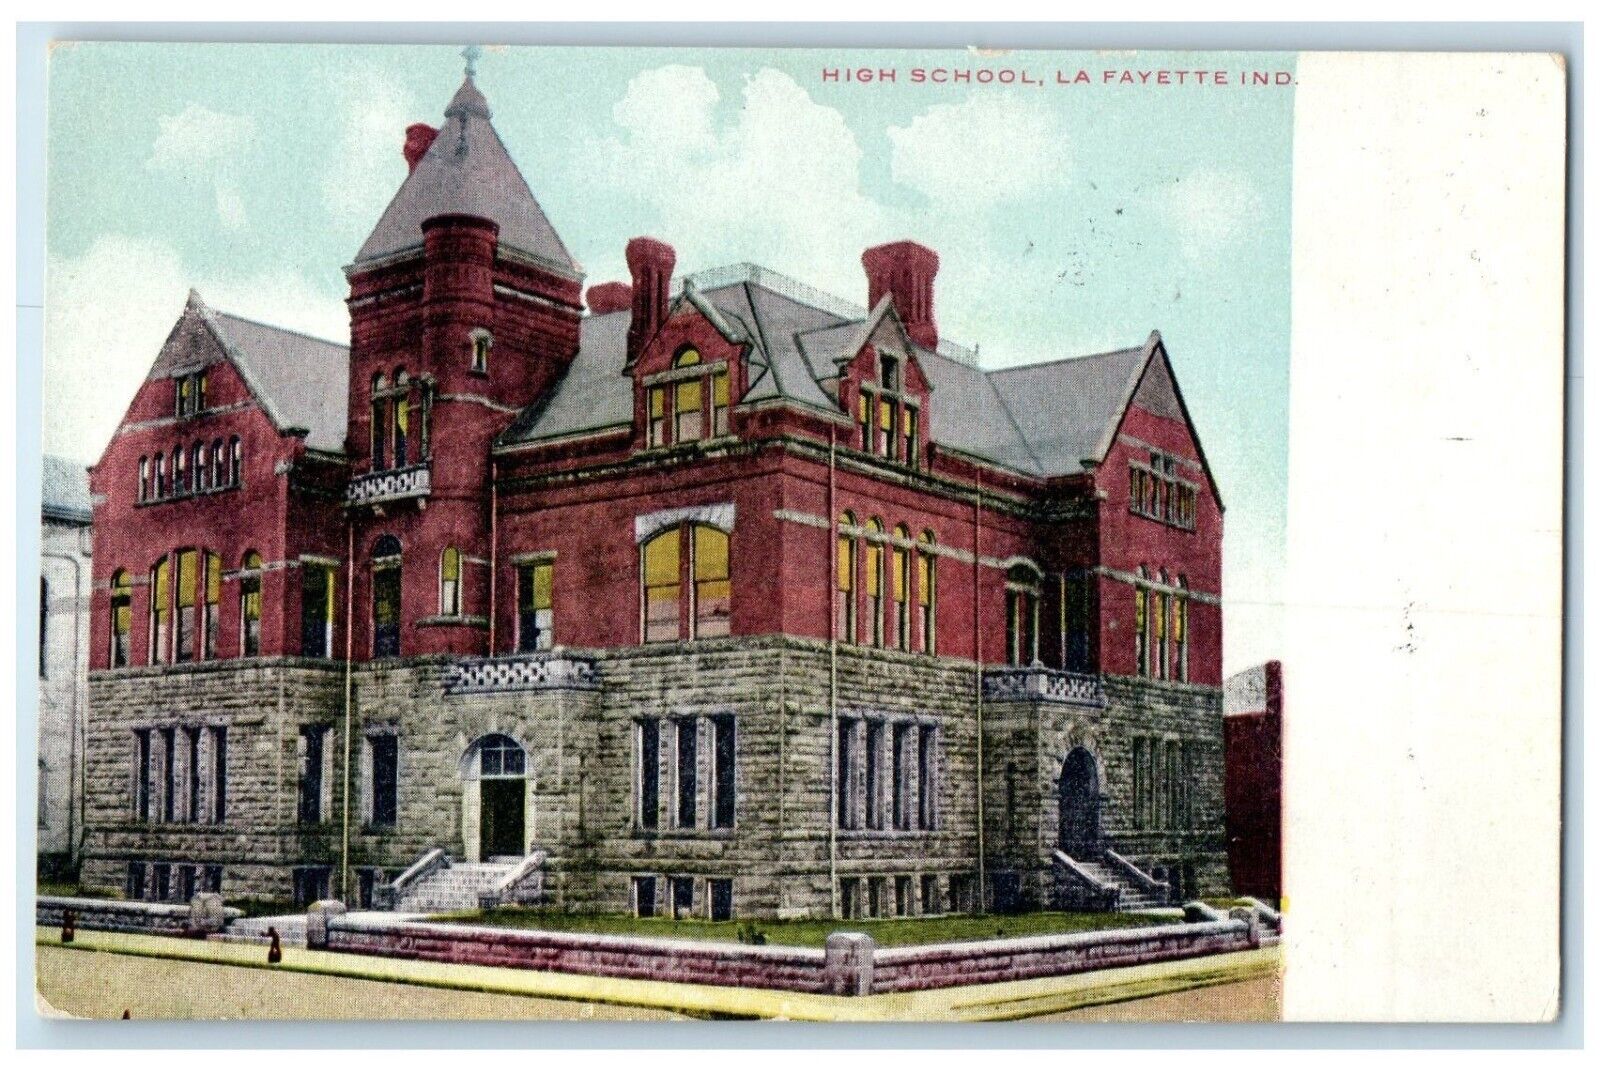 c1910 High School Exterior Building La Fayette Indiana Vintage Antique Postcard